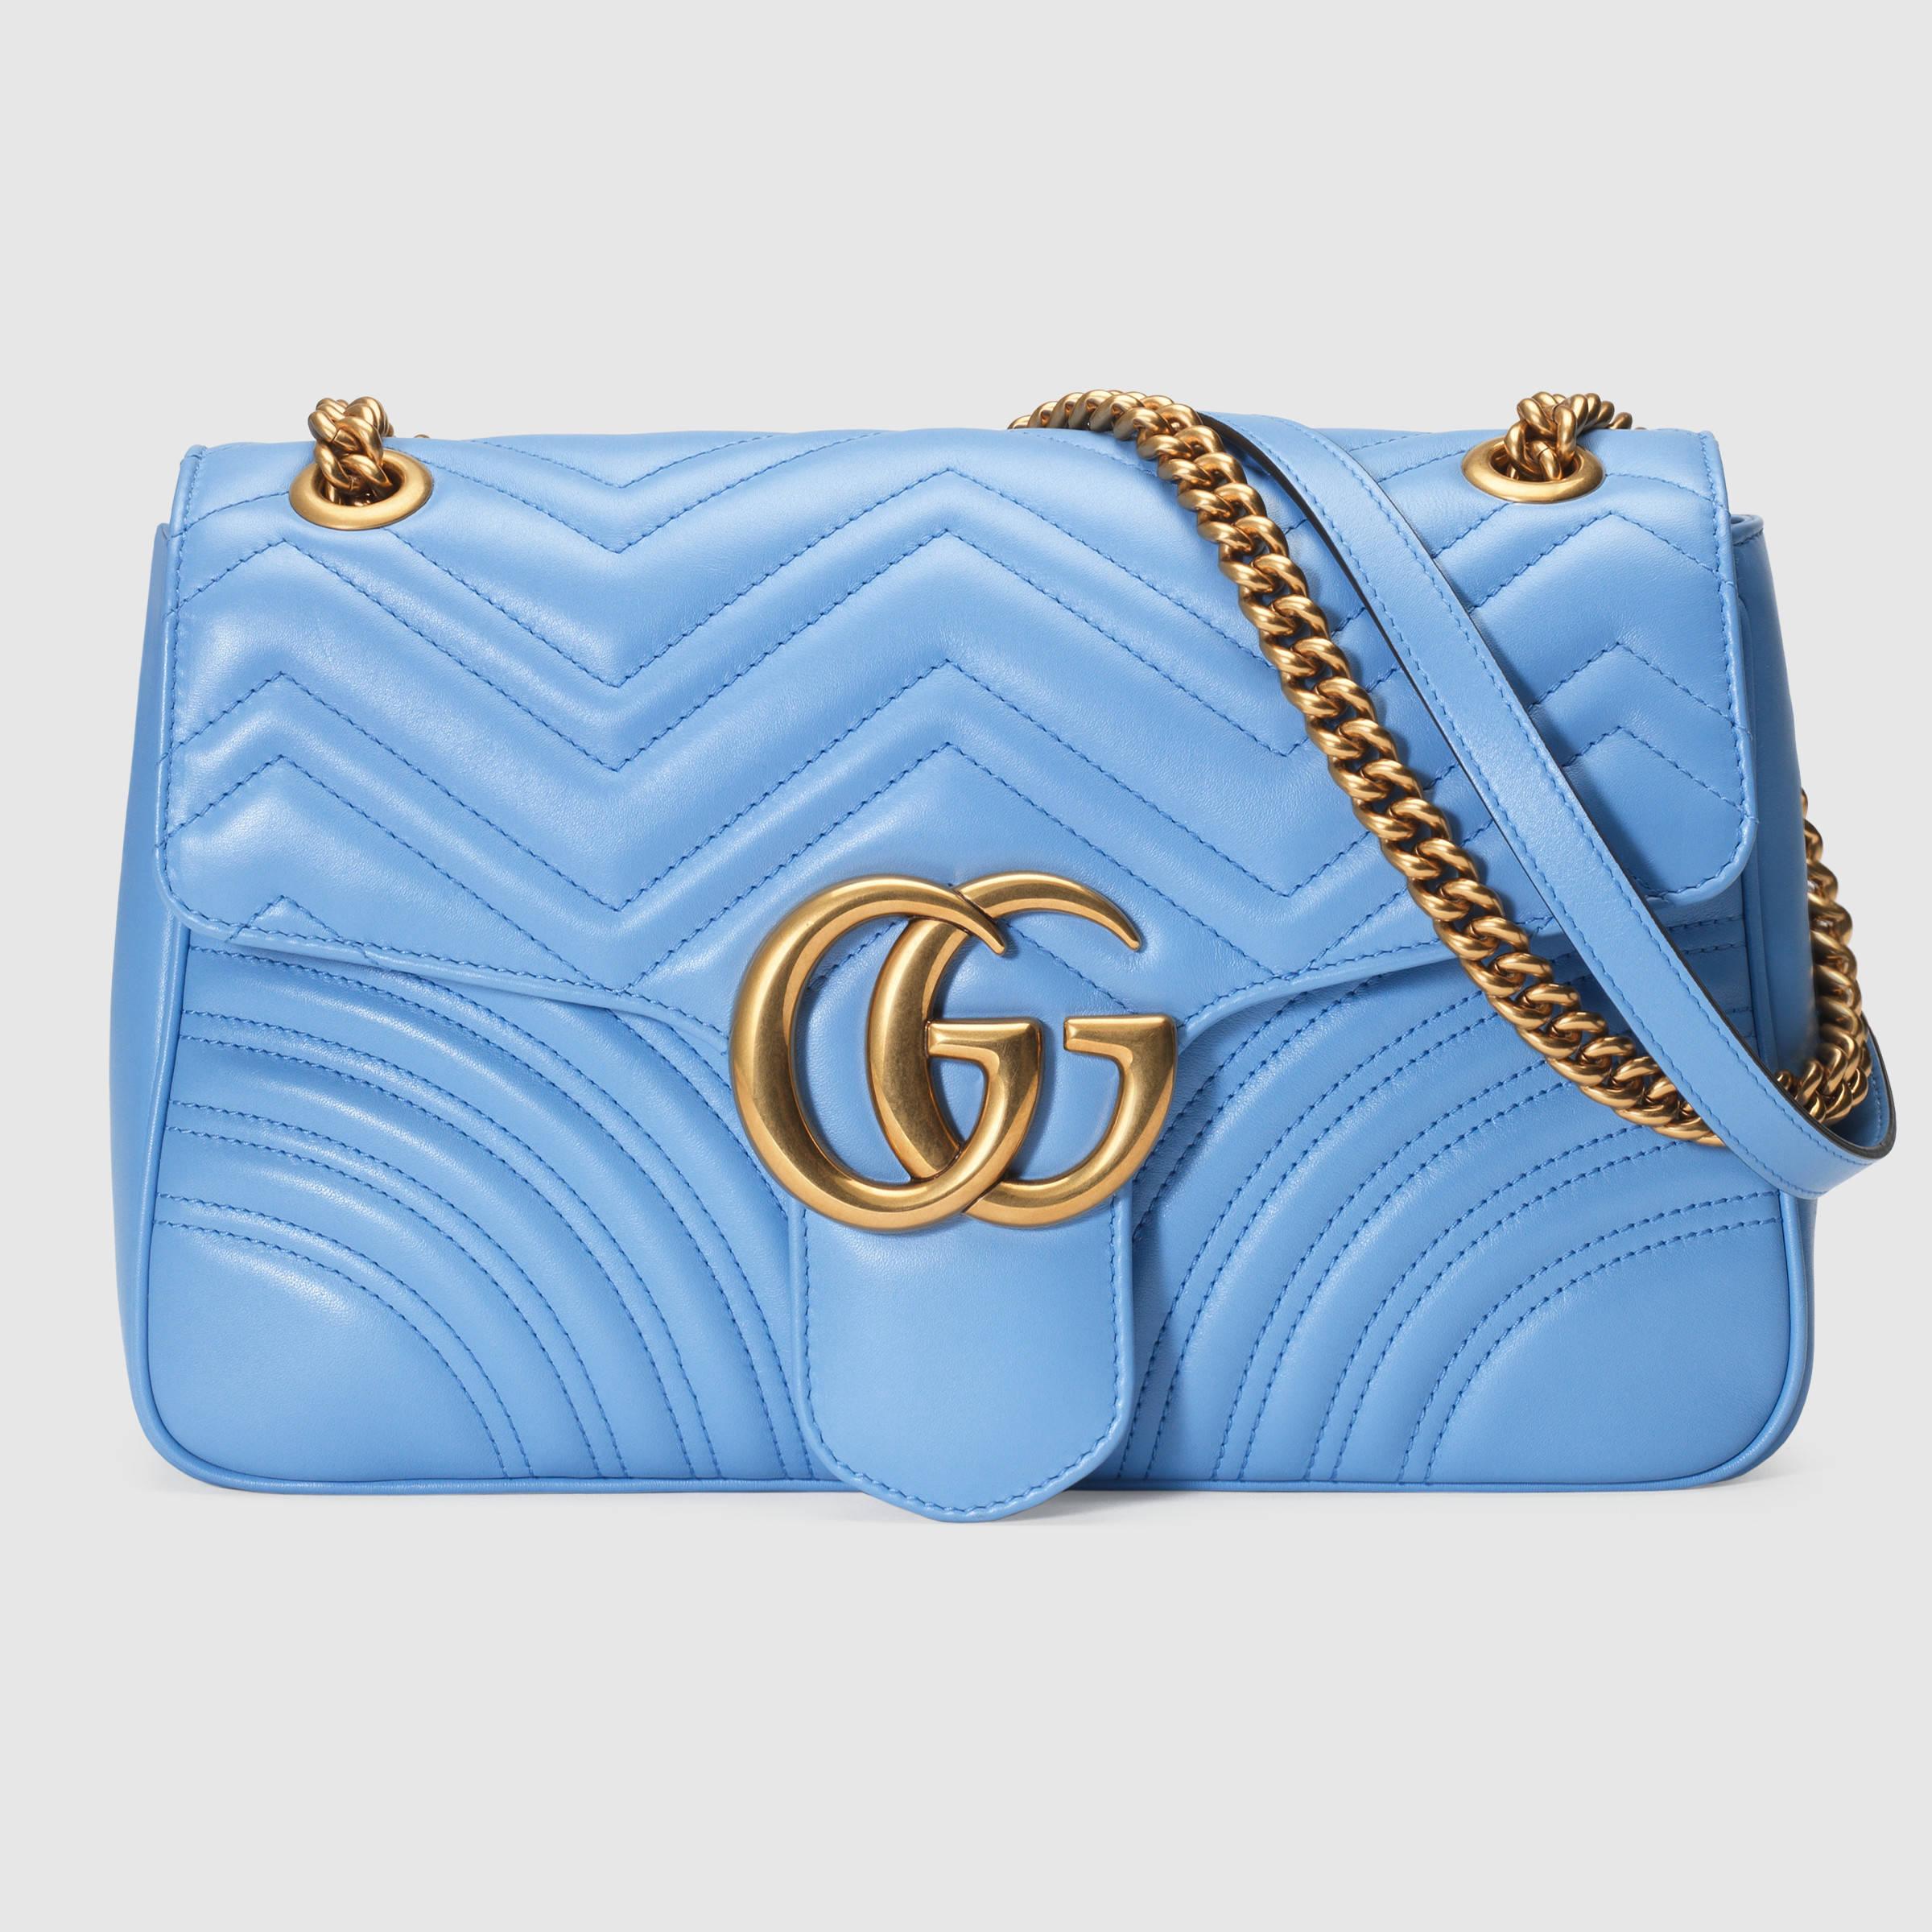 Lyst - Gucci Mini Gg Marmont Crossbody Bag in Blue